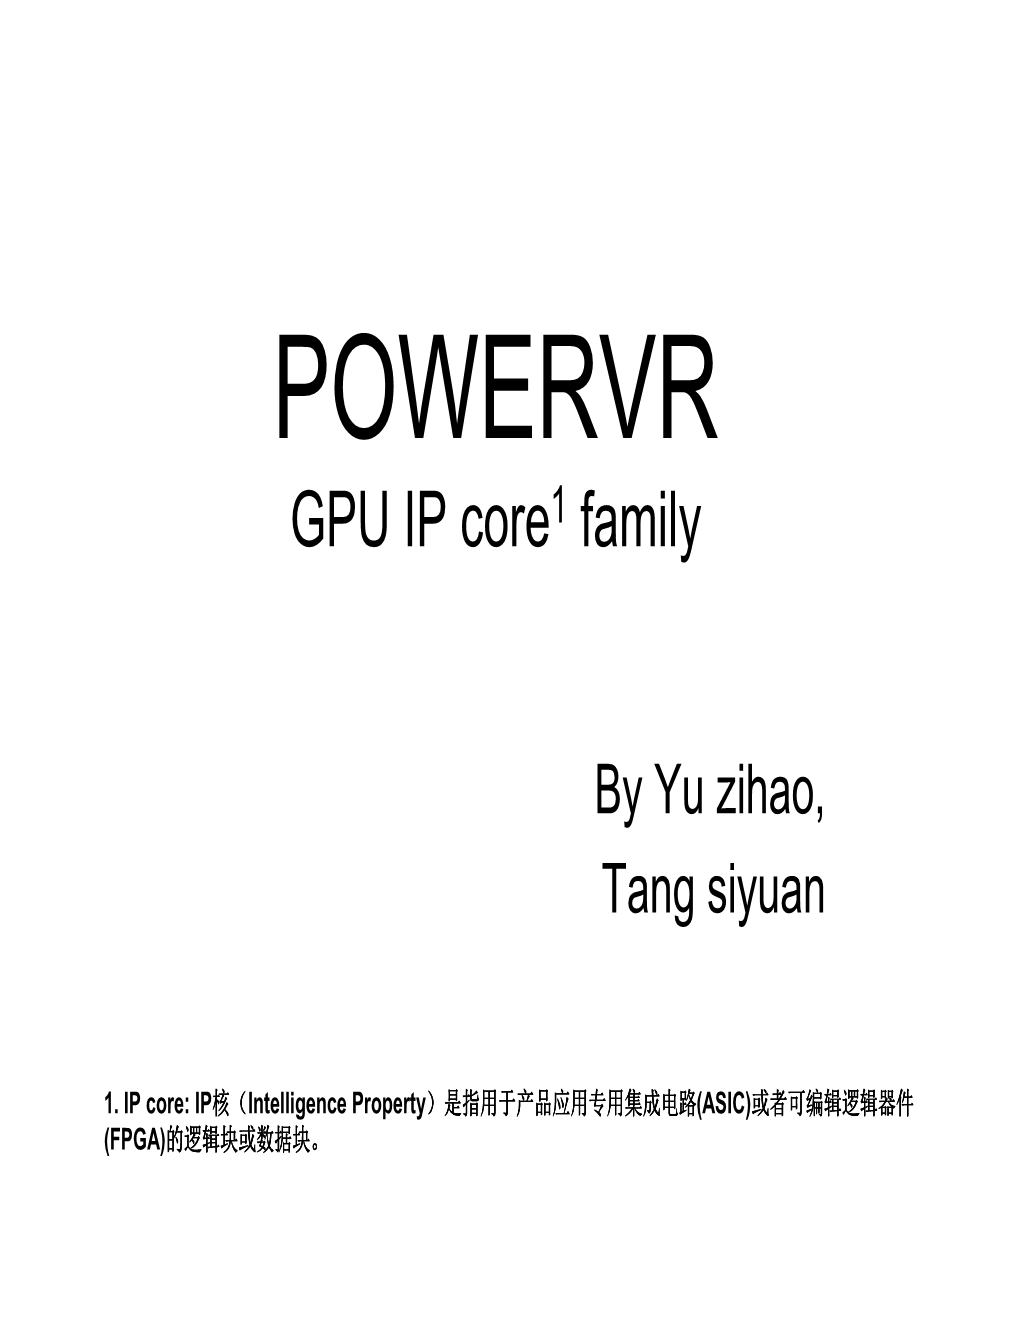 POWERVR GPU IP Core1 Family